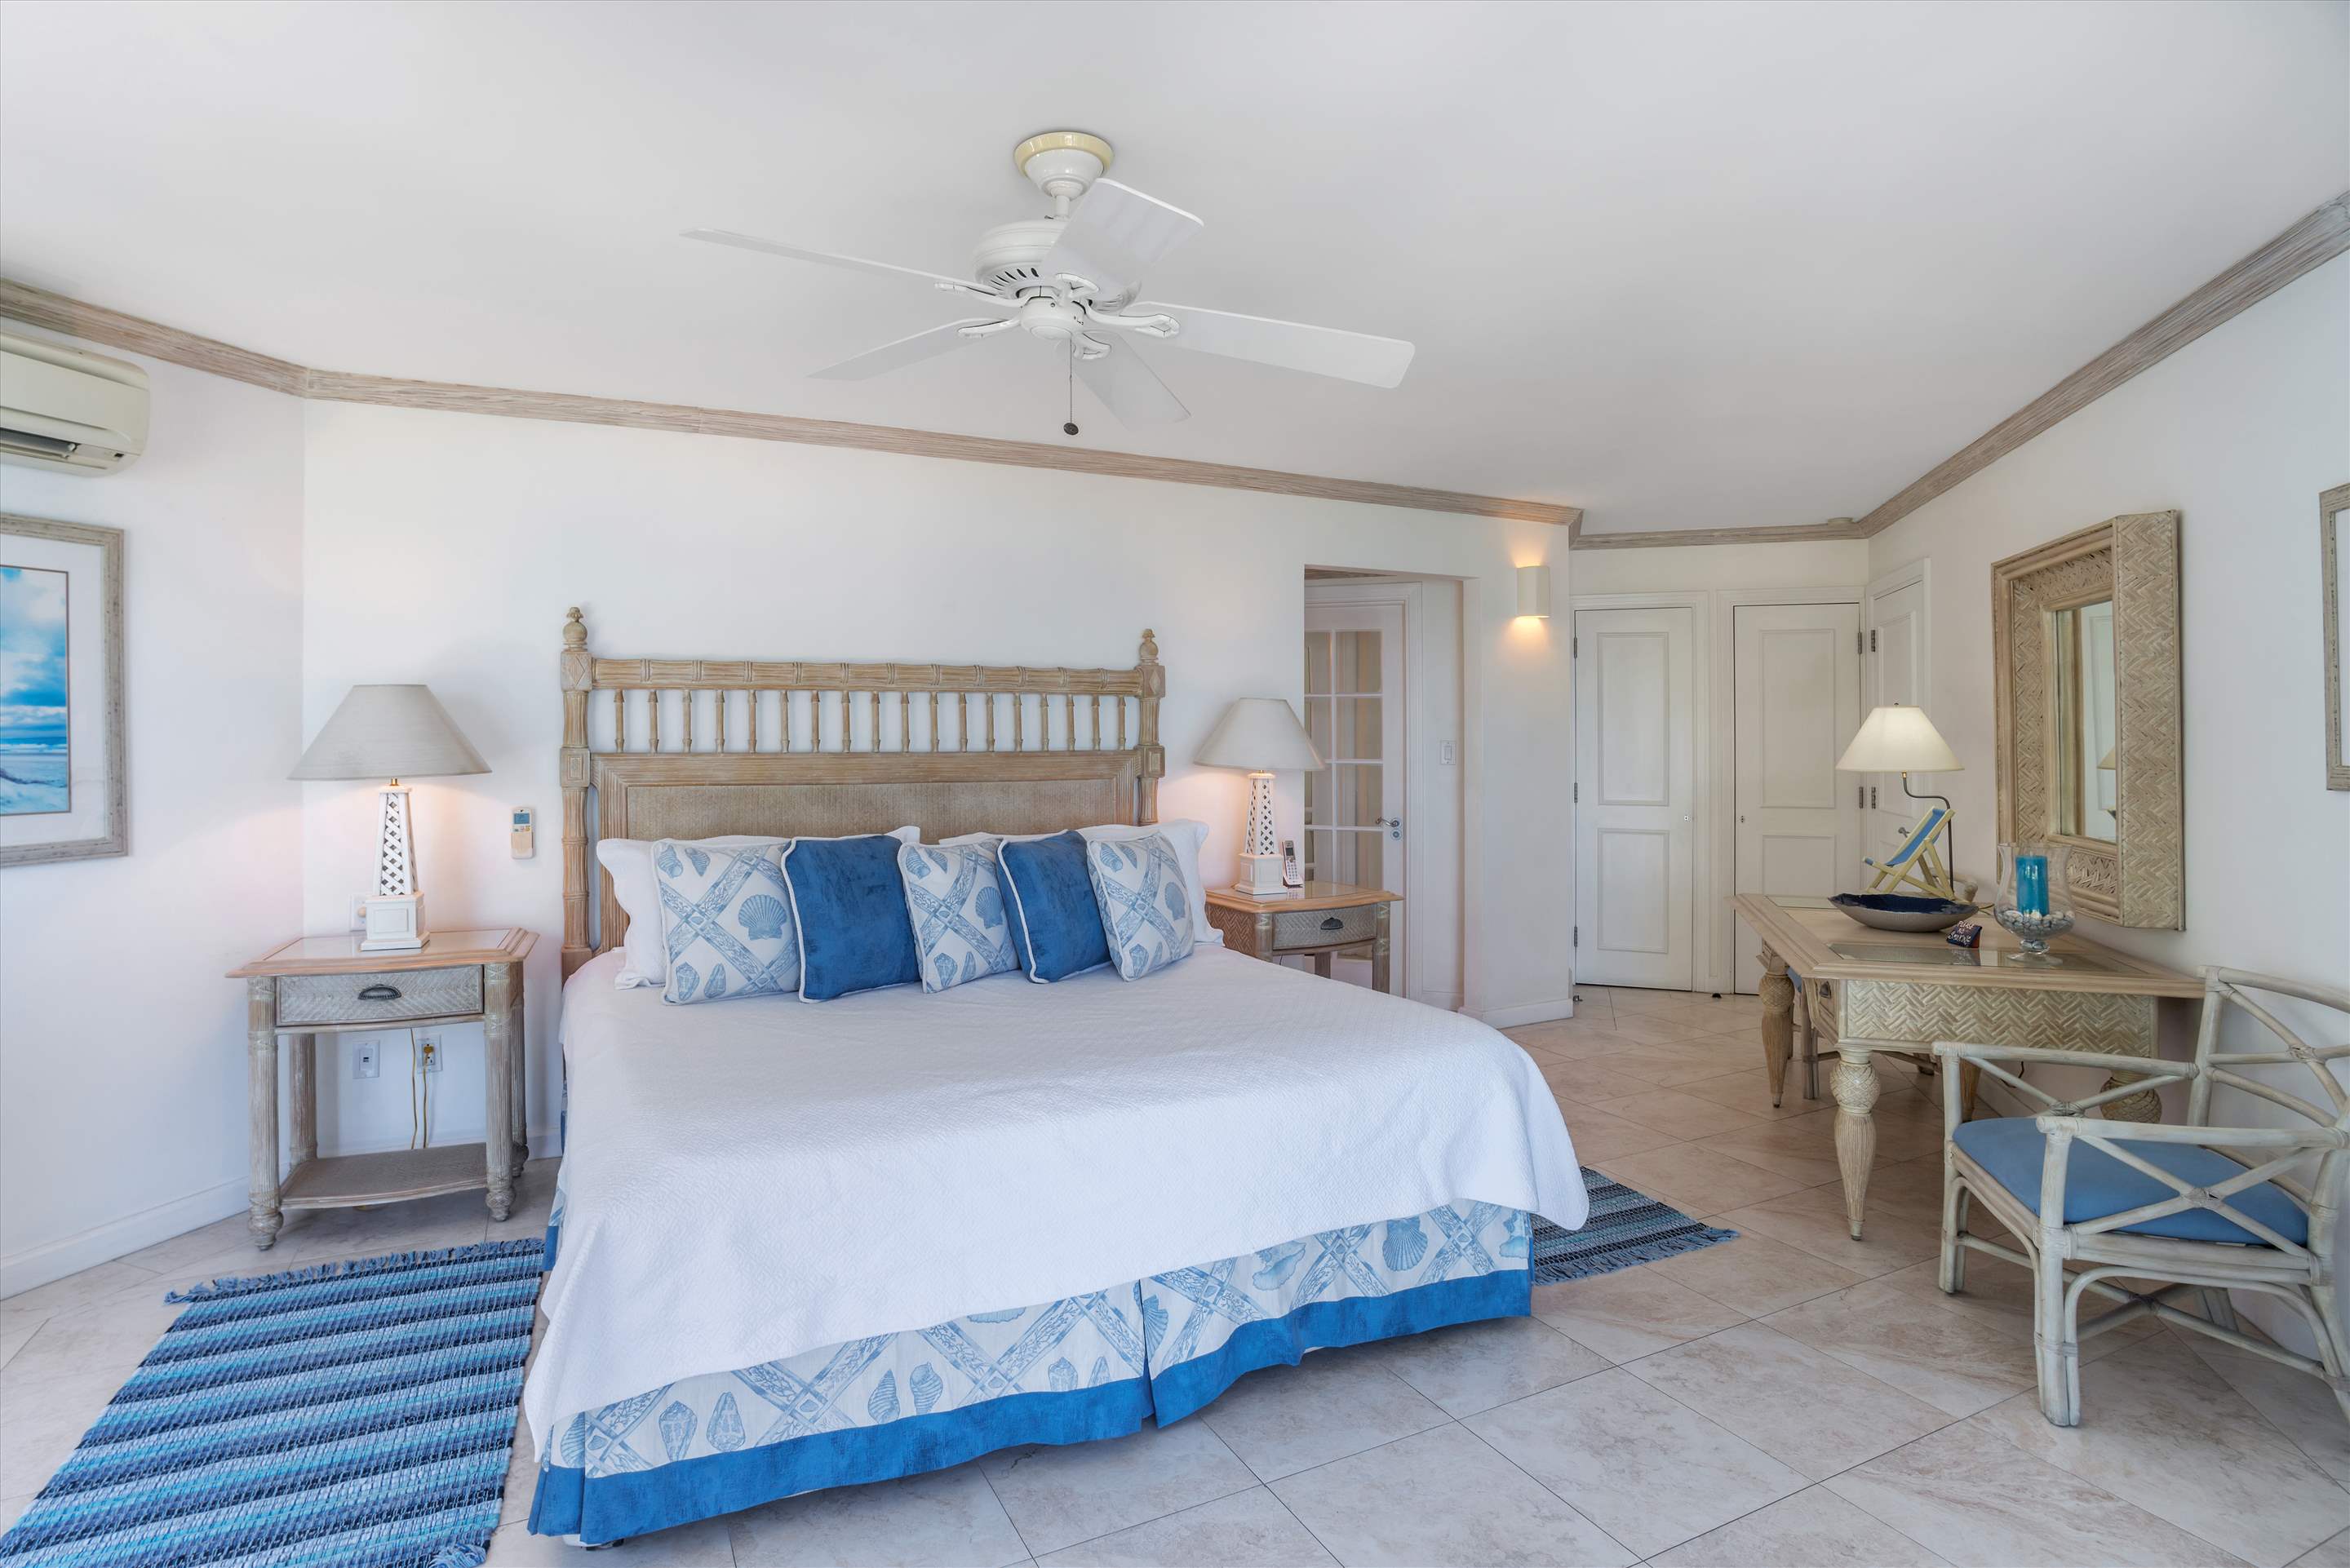 Villas on the Beach 205, 1 bedroom, 1 bedroom apartment in St. James & West Coast, Barbados Photo #8